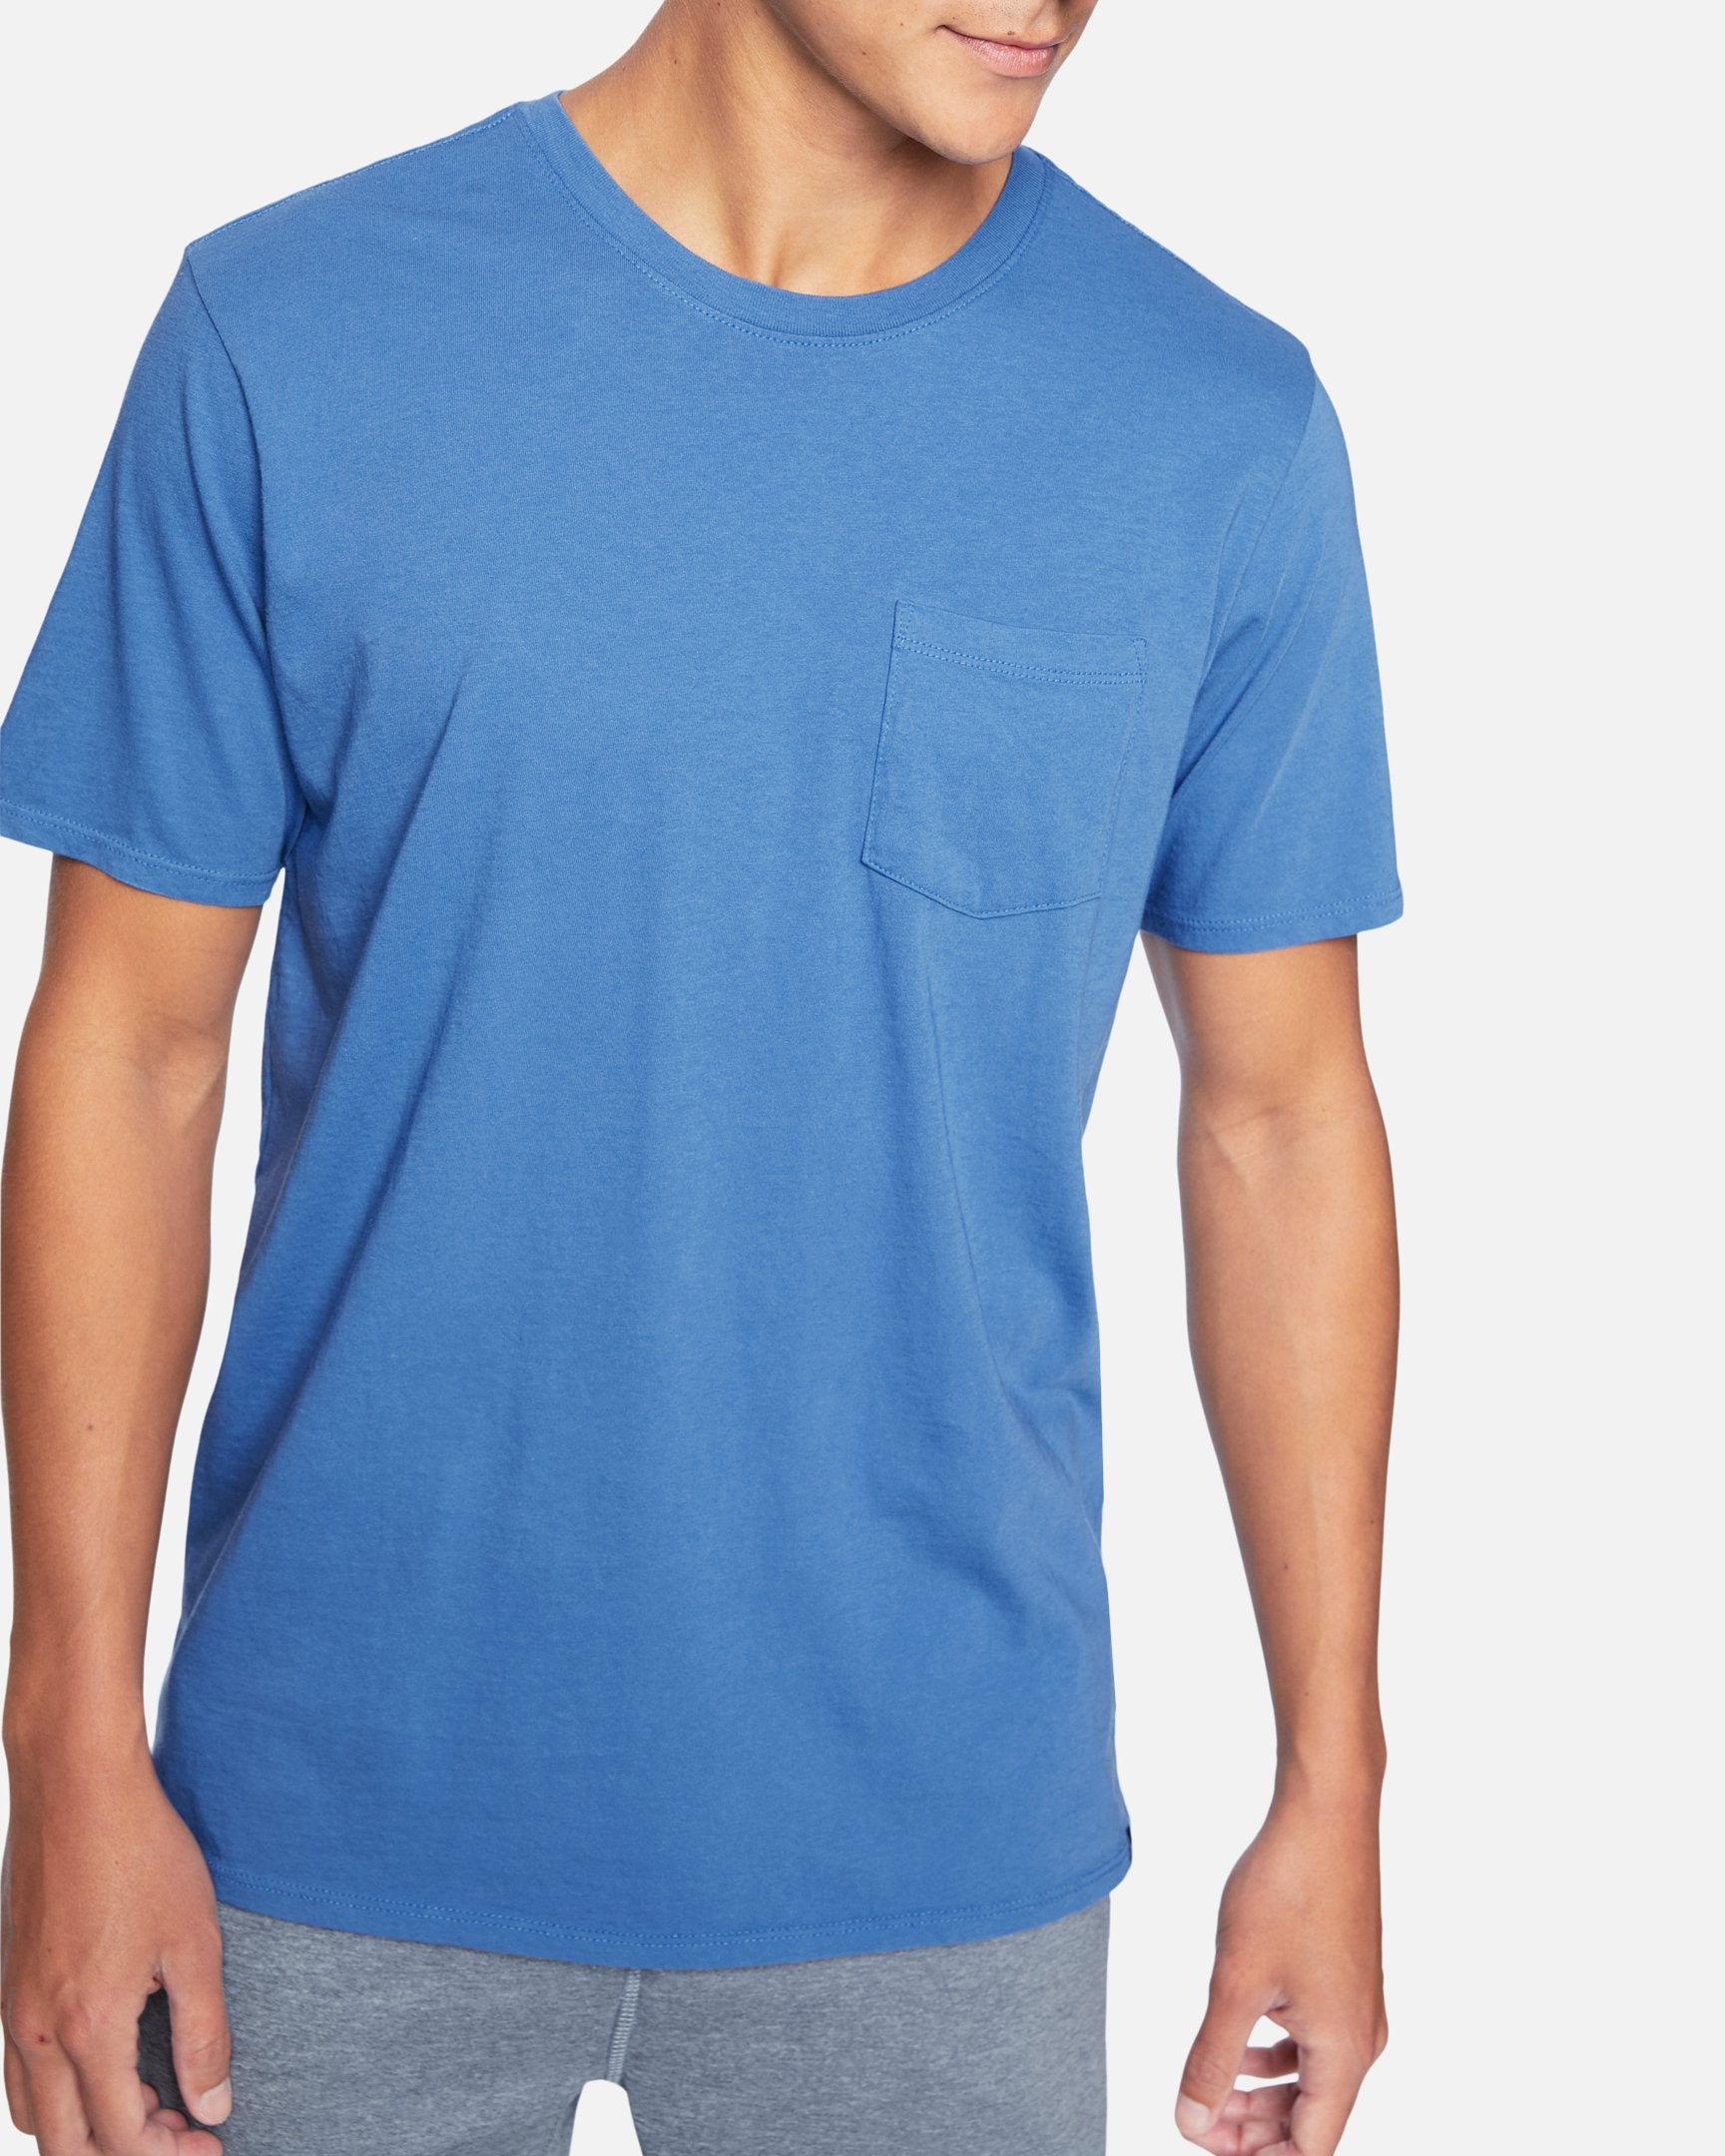 Men's Bnz Staple Pocket Short Sleeve T-Shirt in Stone Blue, Size Medium